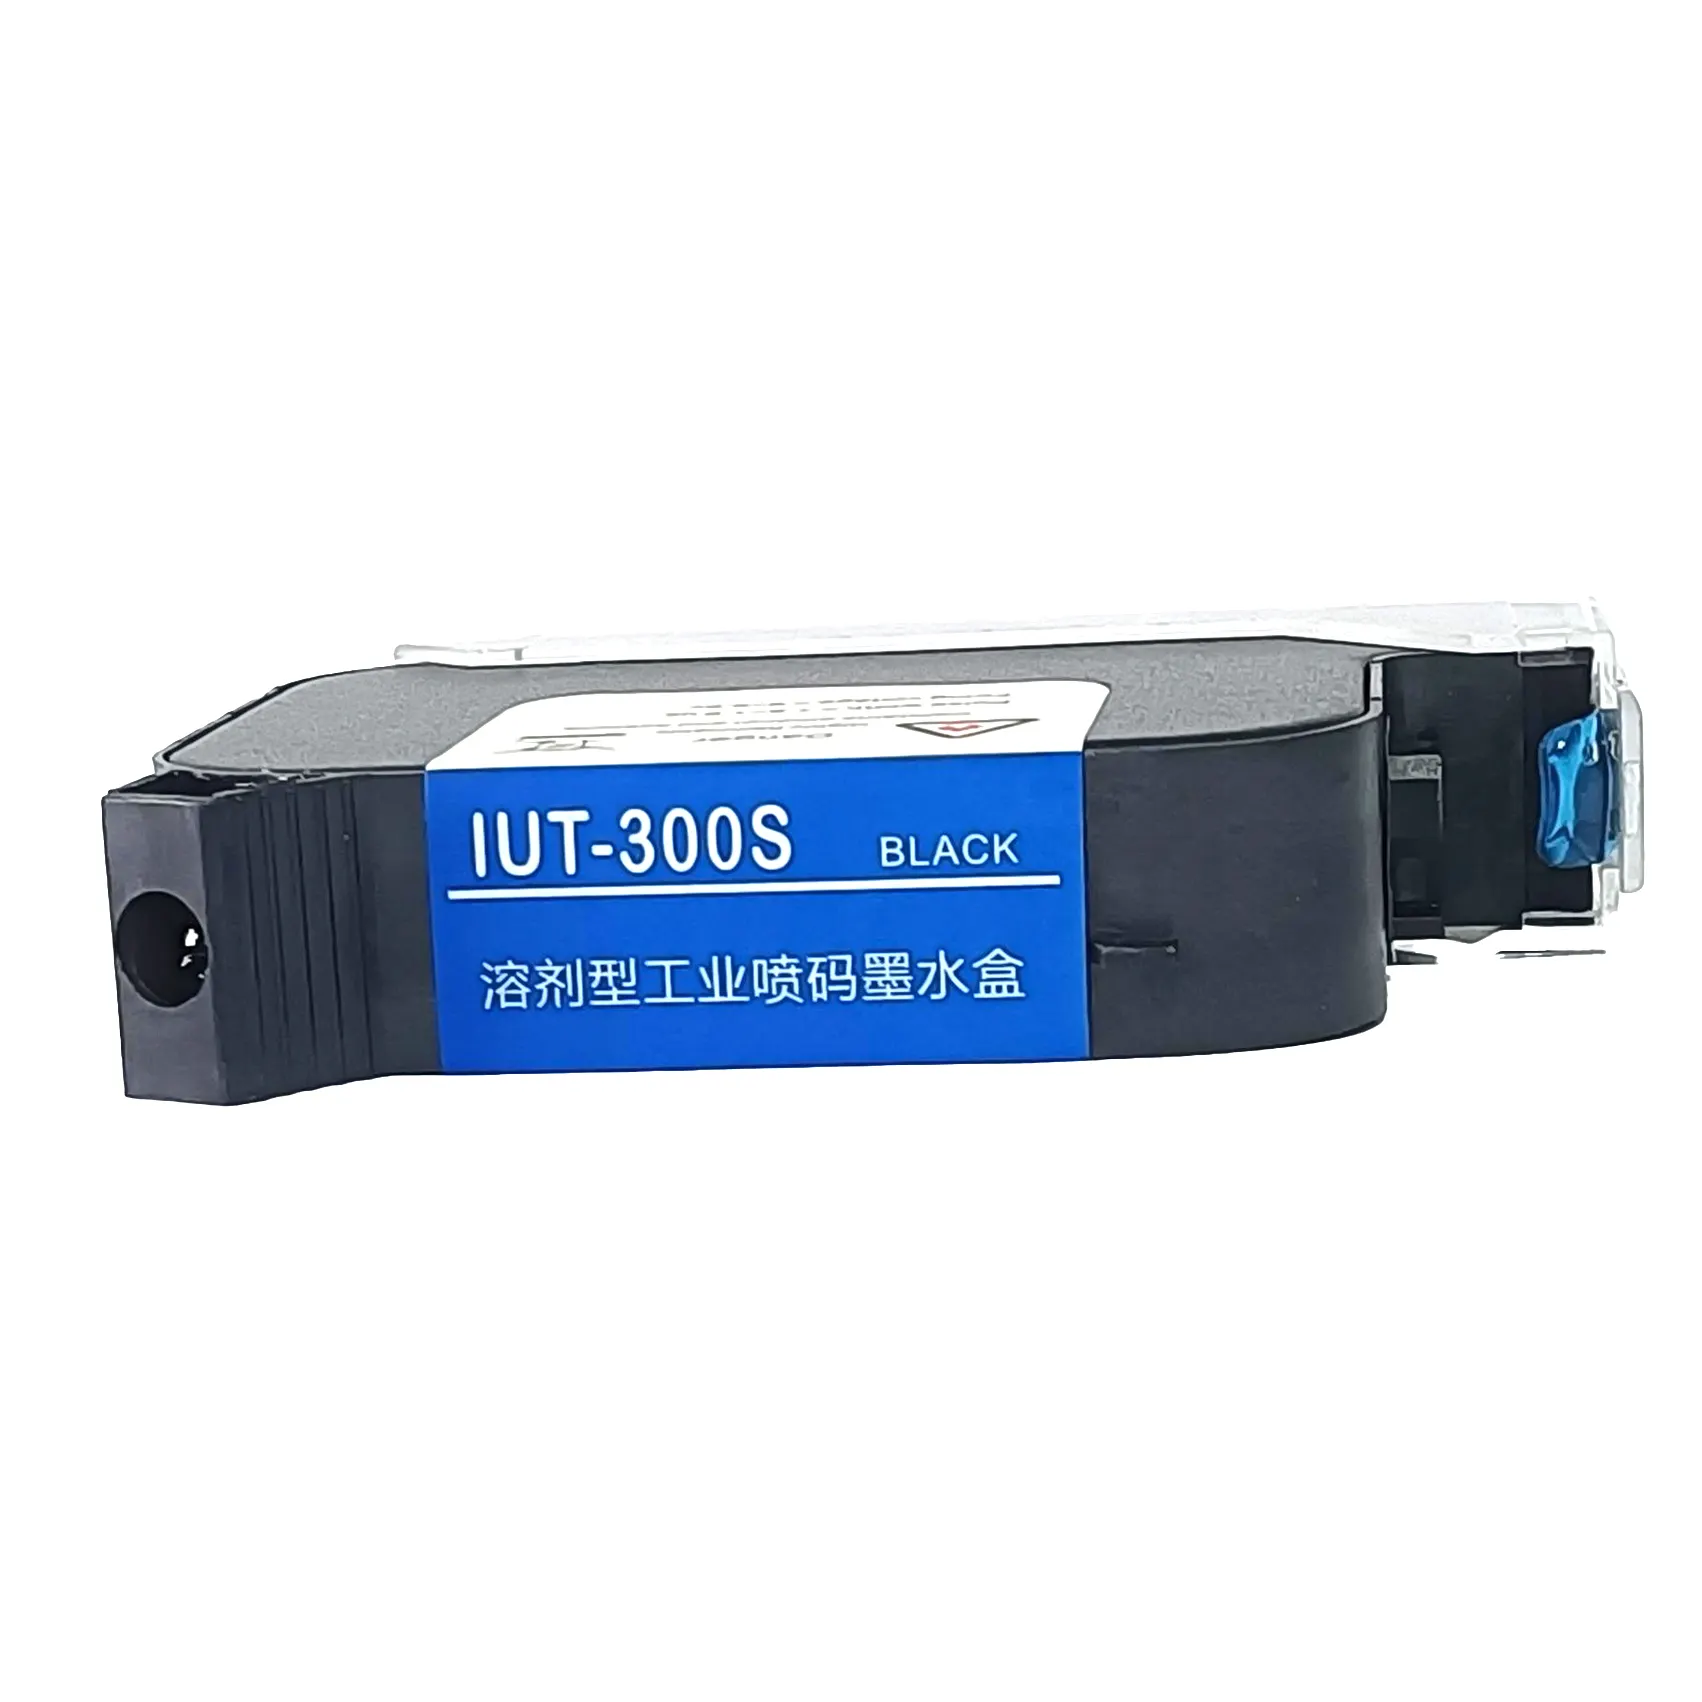 IUT-300S inkcartridge TIJ2.5 wholesale for handheld inkjet printer/Industrial inline inkjet printer on solvent Black ink inkjet